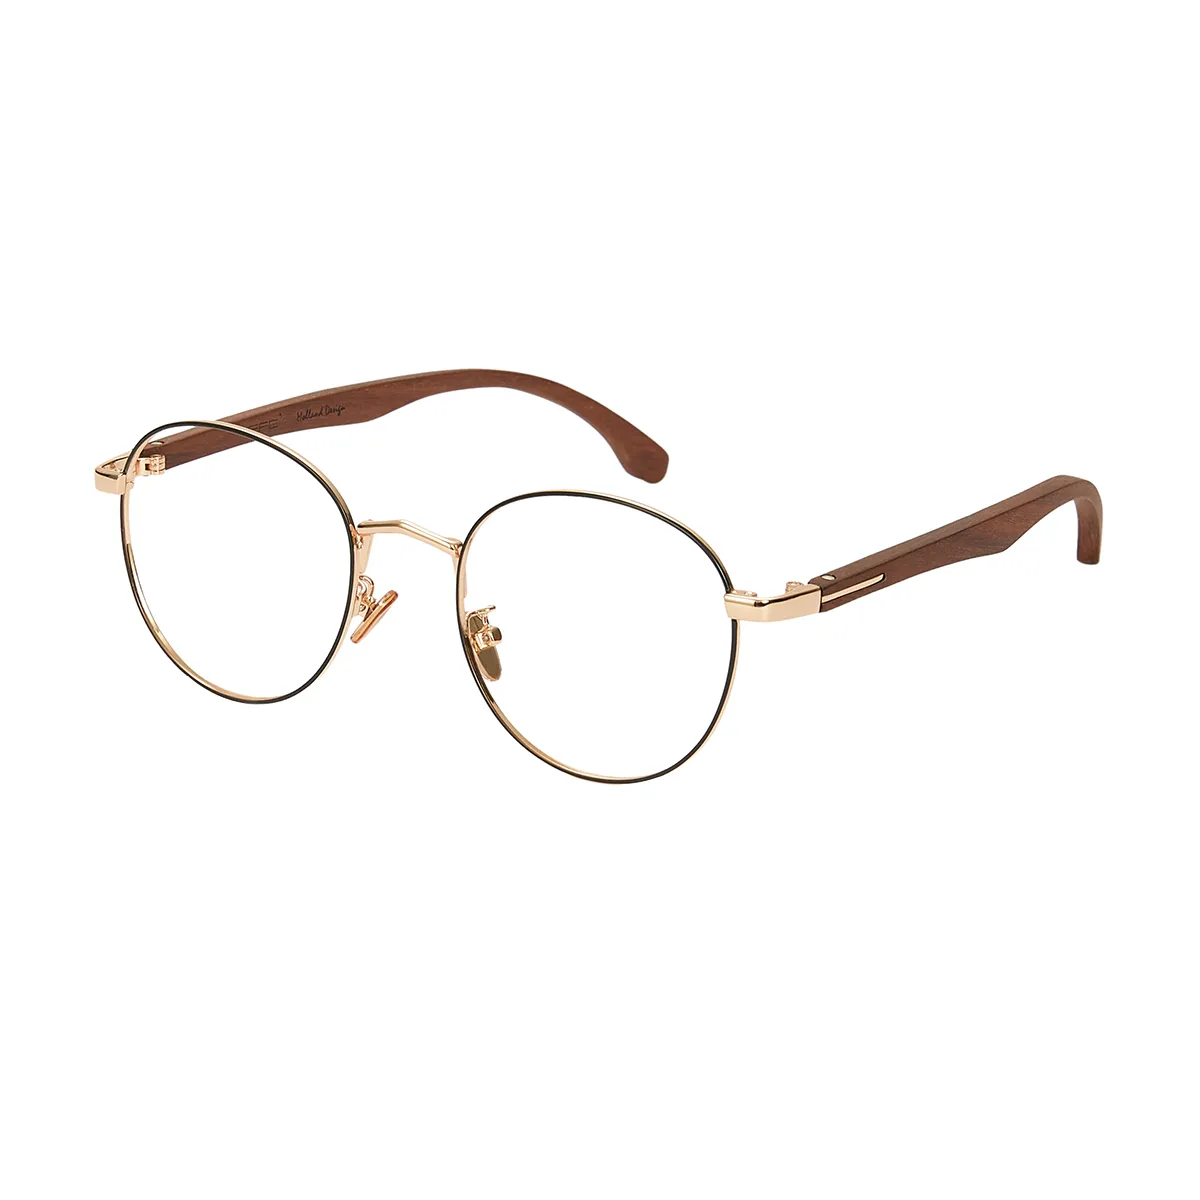 Cyril - Round Black-Brown Glasses for Men